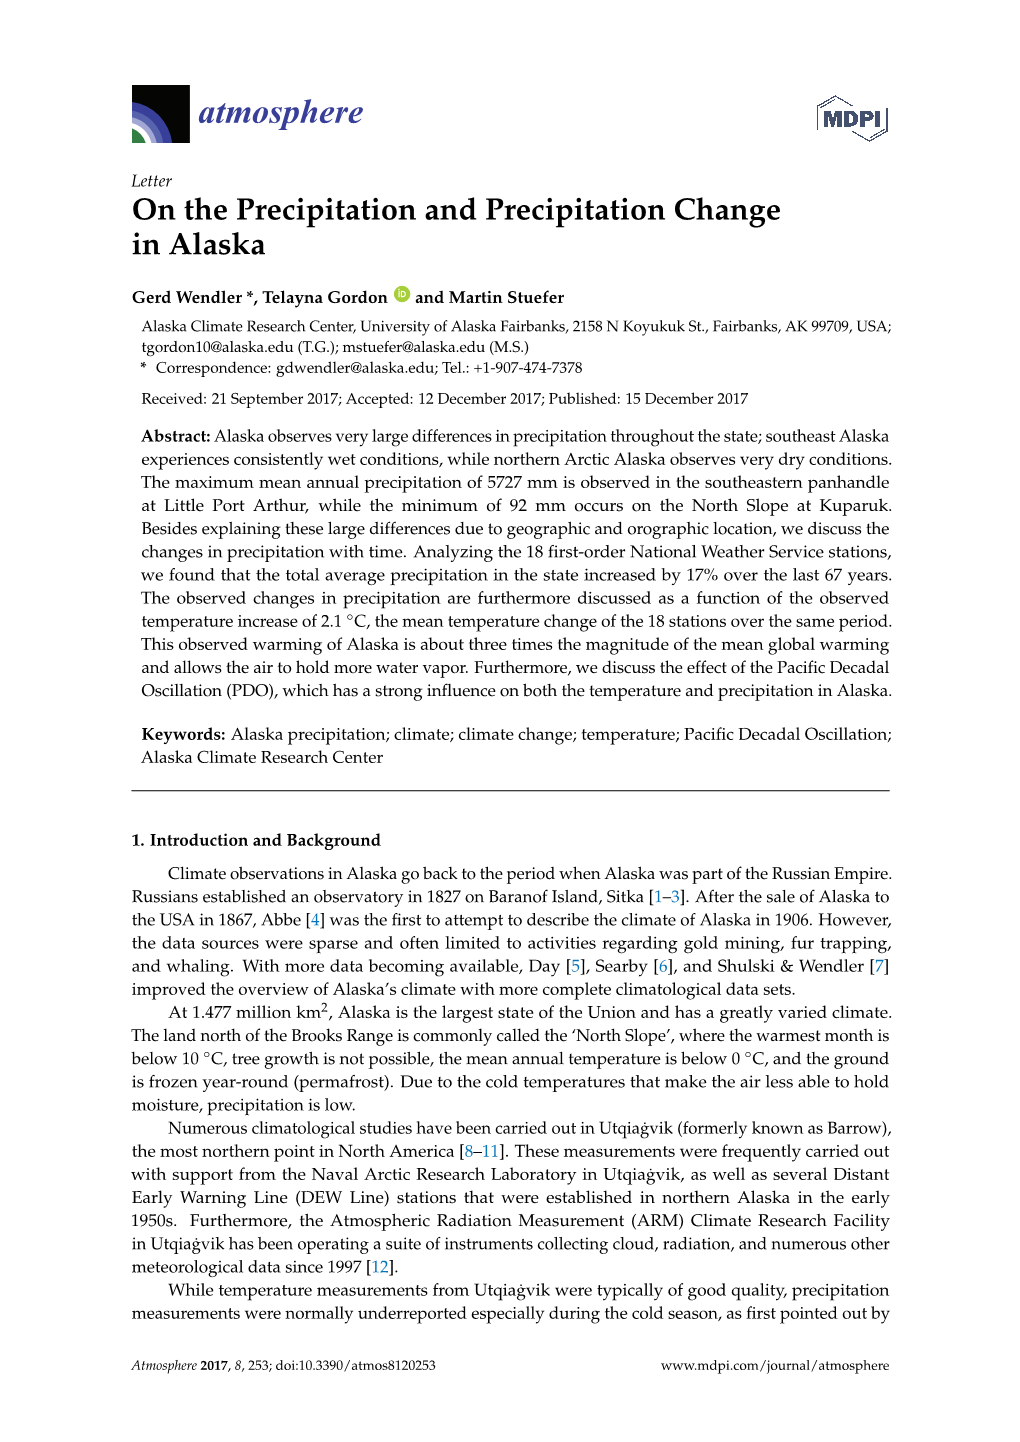 On the Precipitation and Precipitation Change in Alaska